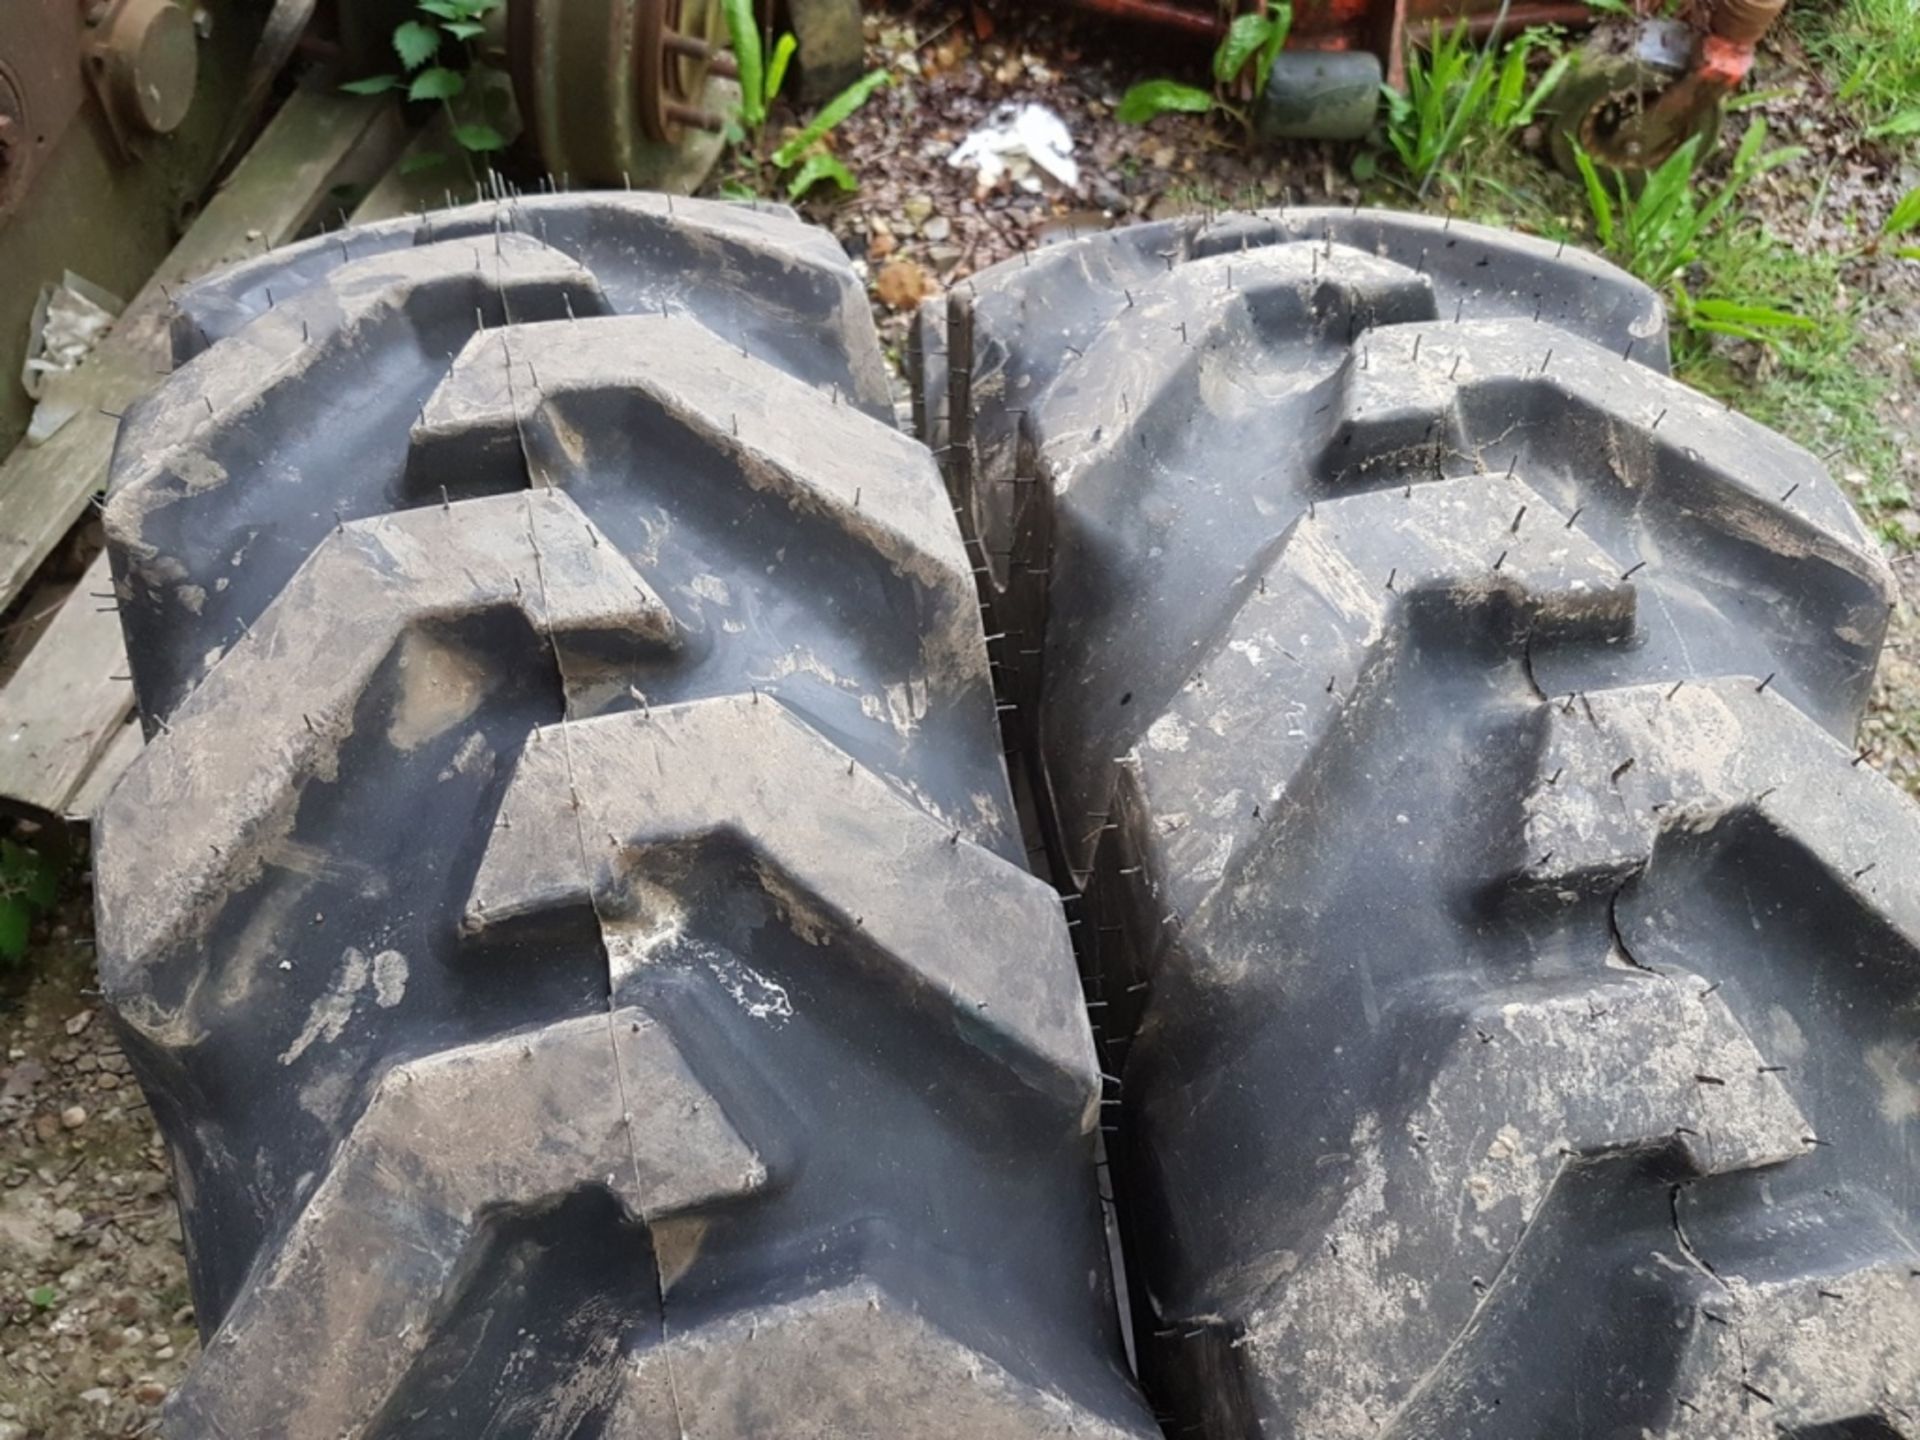 Tyres: 2 x BKT AT 603, 12.5/80-18, 12-ply rating Tyres, suit JCB/Dumper.